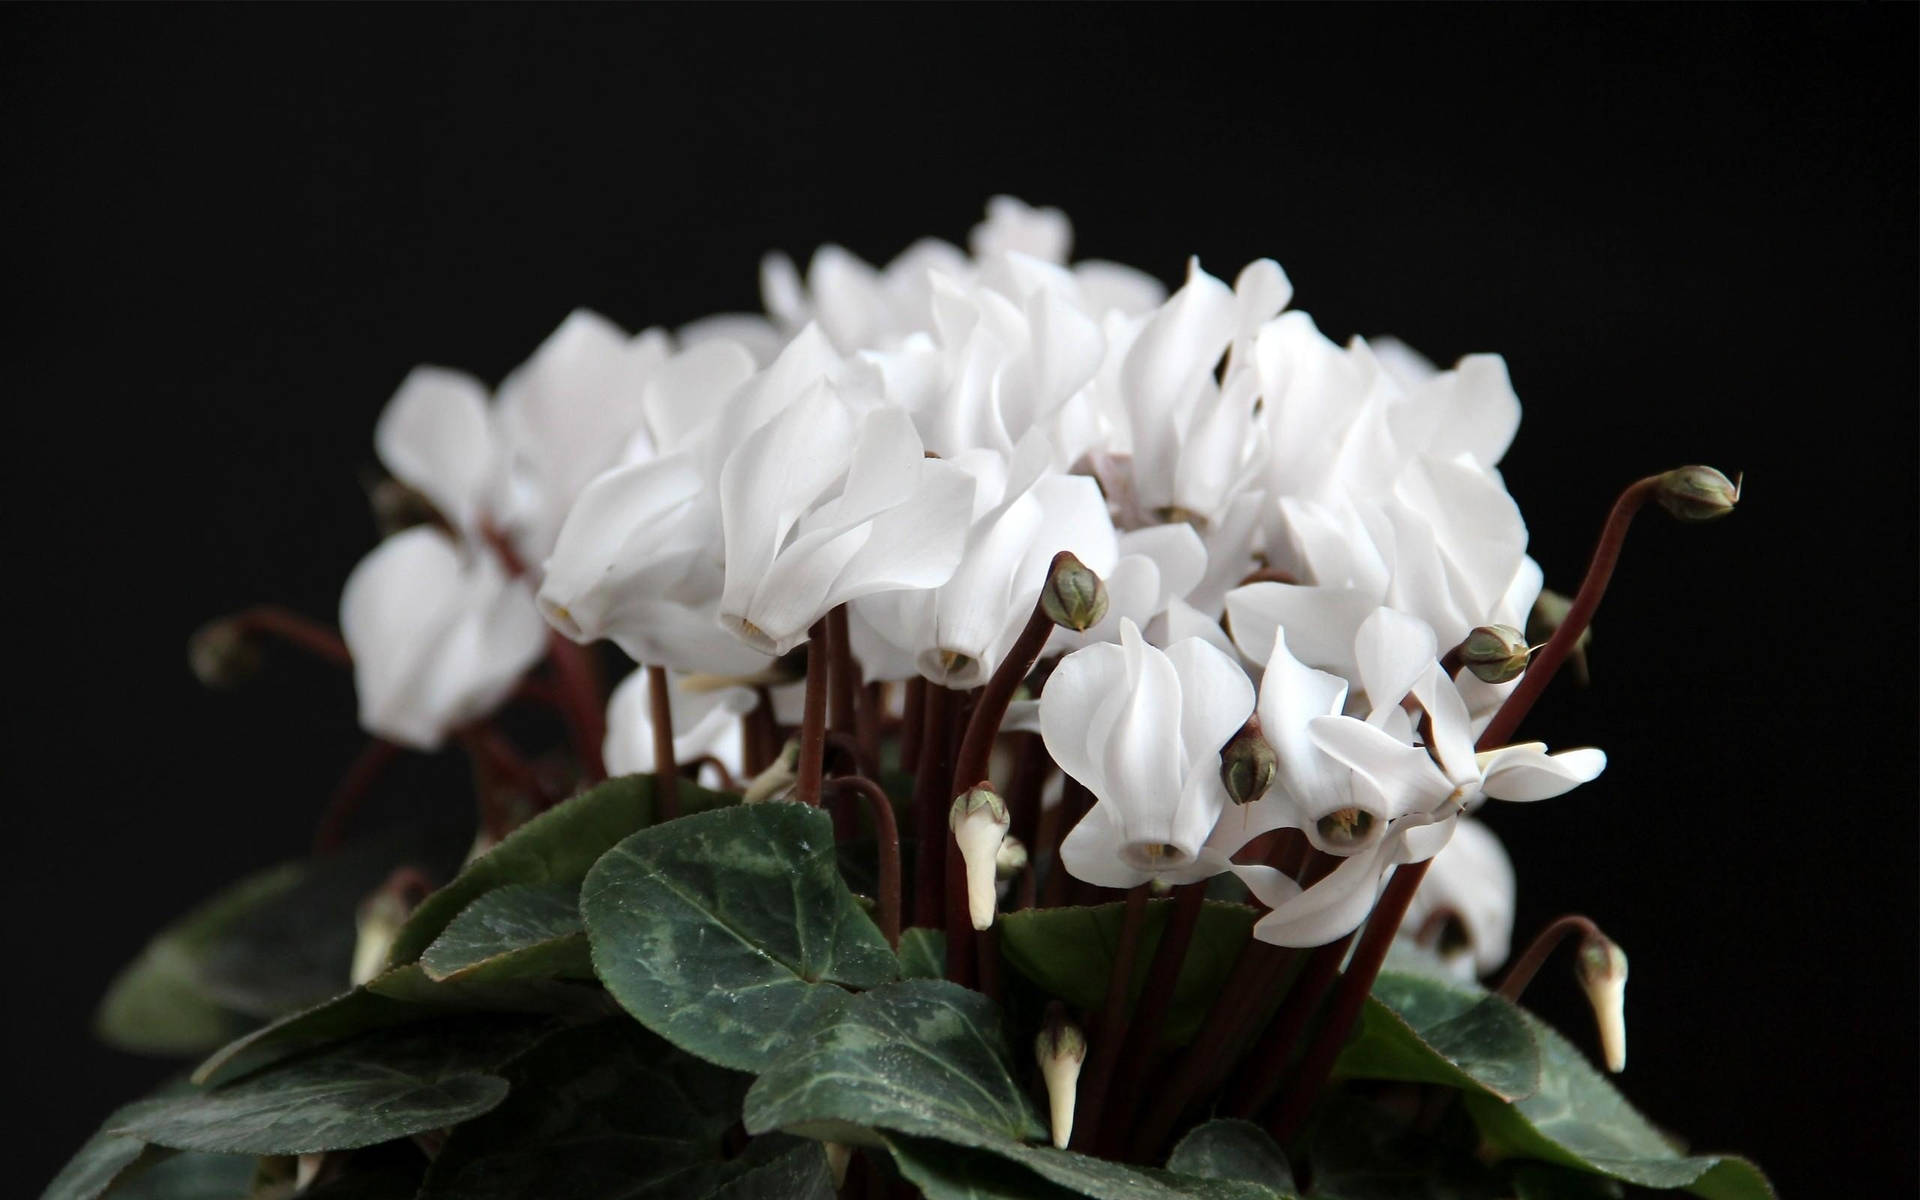 Vibrant White Cyclamen Blossoms In Full Bloom